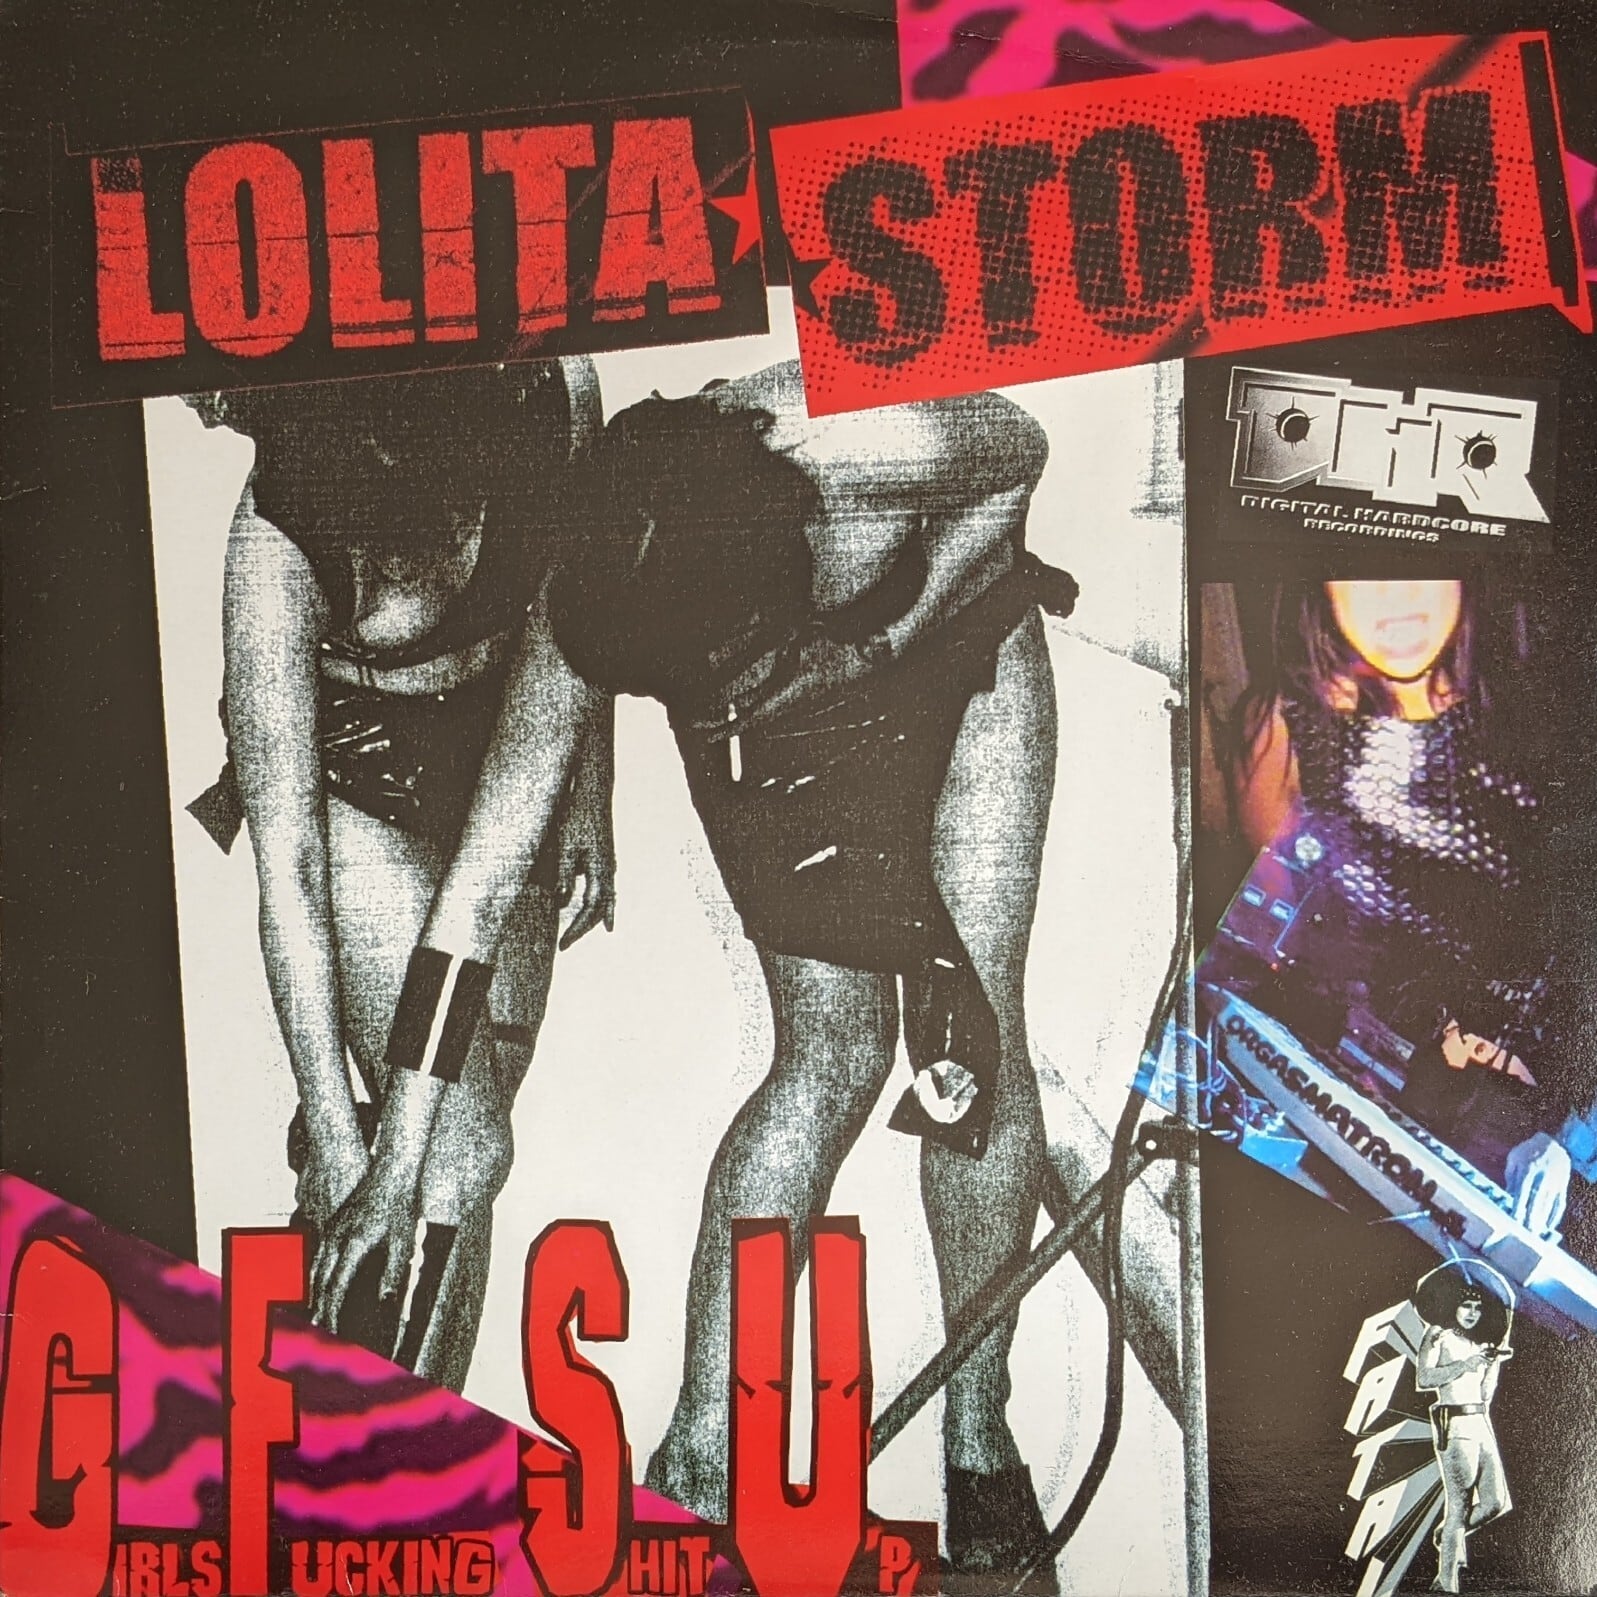 Lolita Storm Girls Fucking Shit Up［中古LP］ September Records